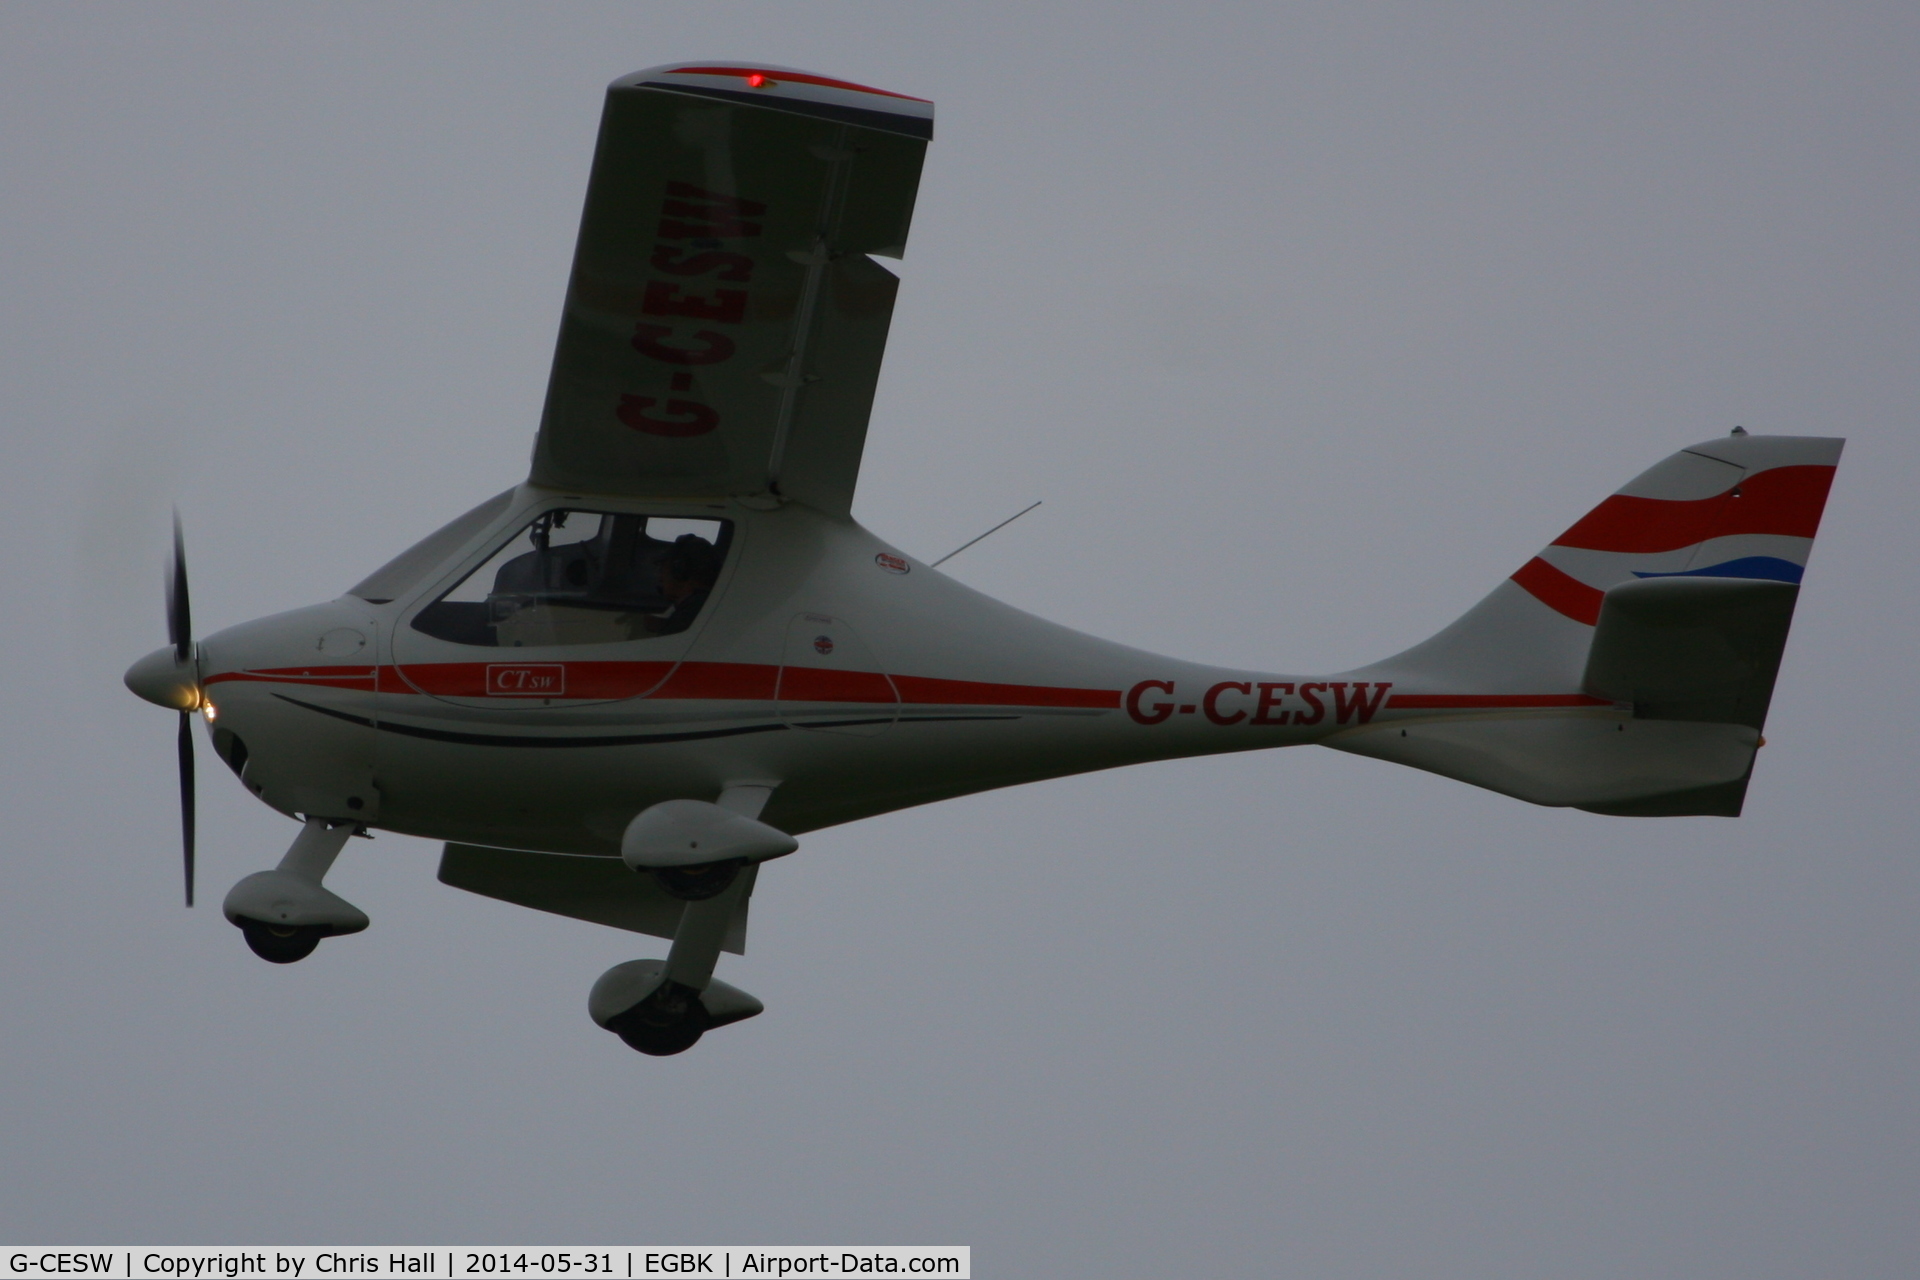 G-CESW, 2007 Flight Design CTSW C/N 8296, at AeroExpo 2014